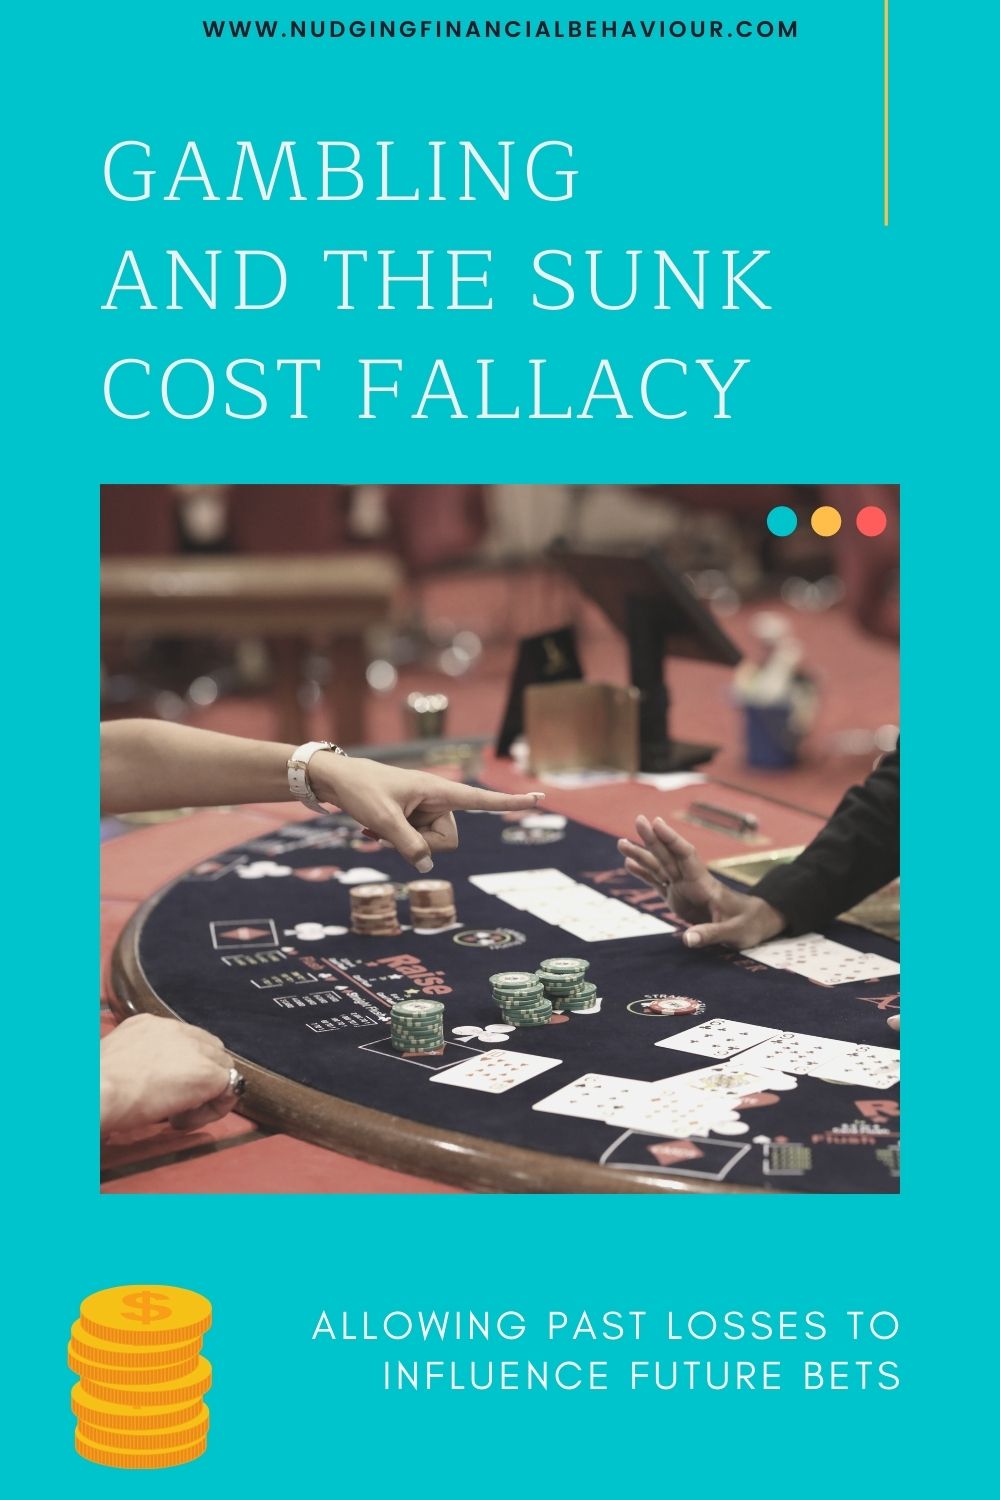 Gambling & the sunk cost fallacy